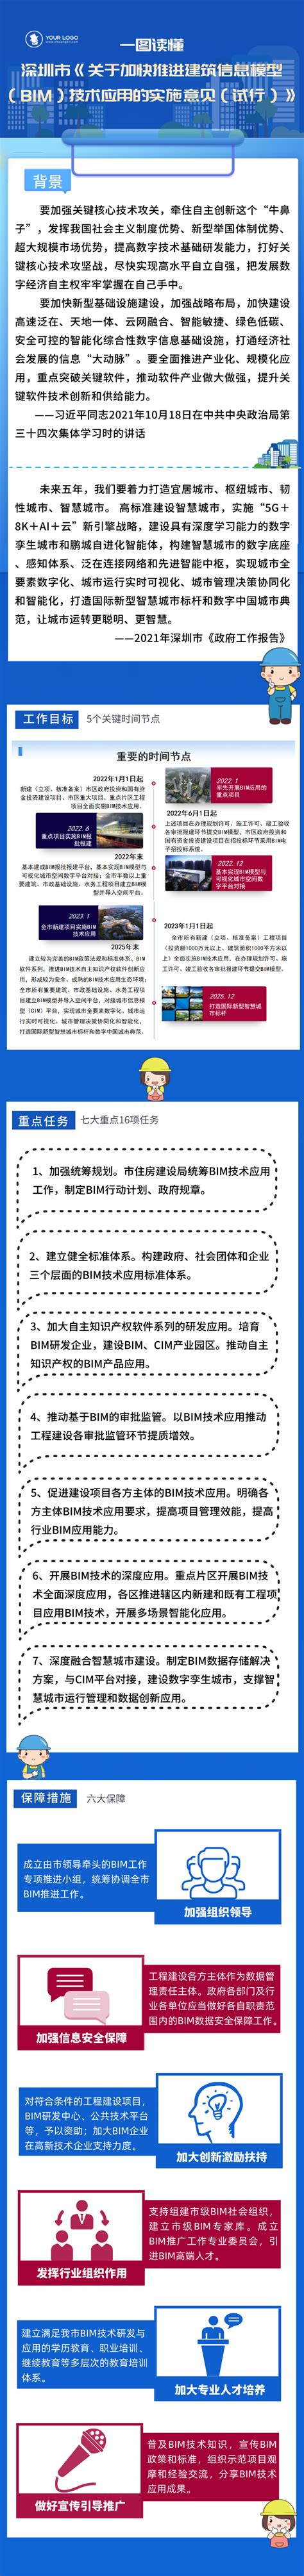 BIM招投标 | 深圳市《关于加快推进建筑信息模型（BIM）技术应用的实施意见》